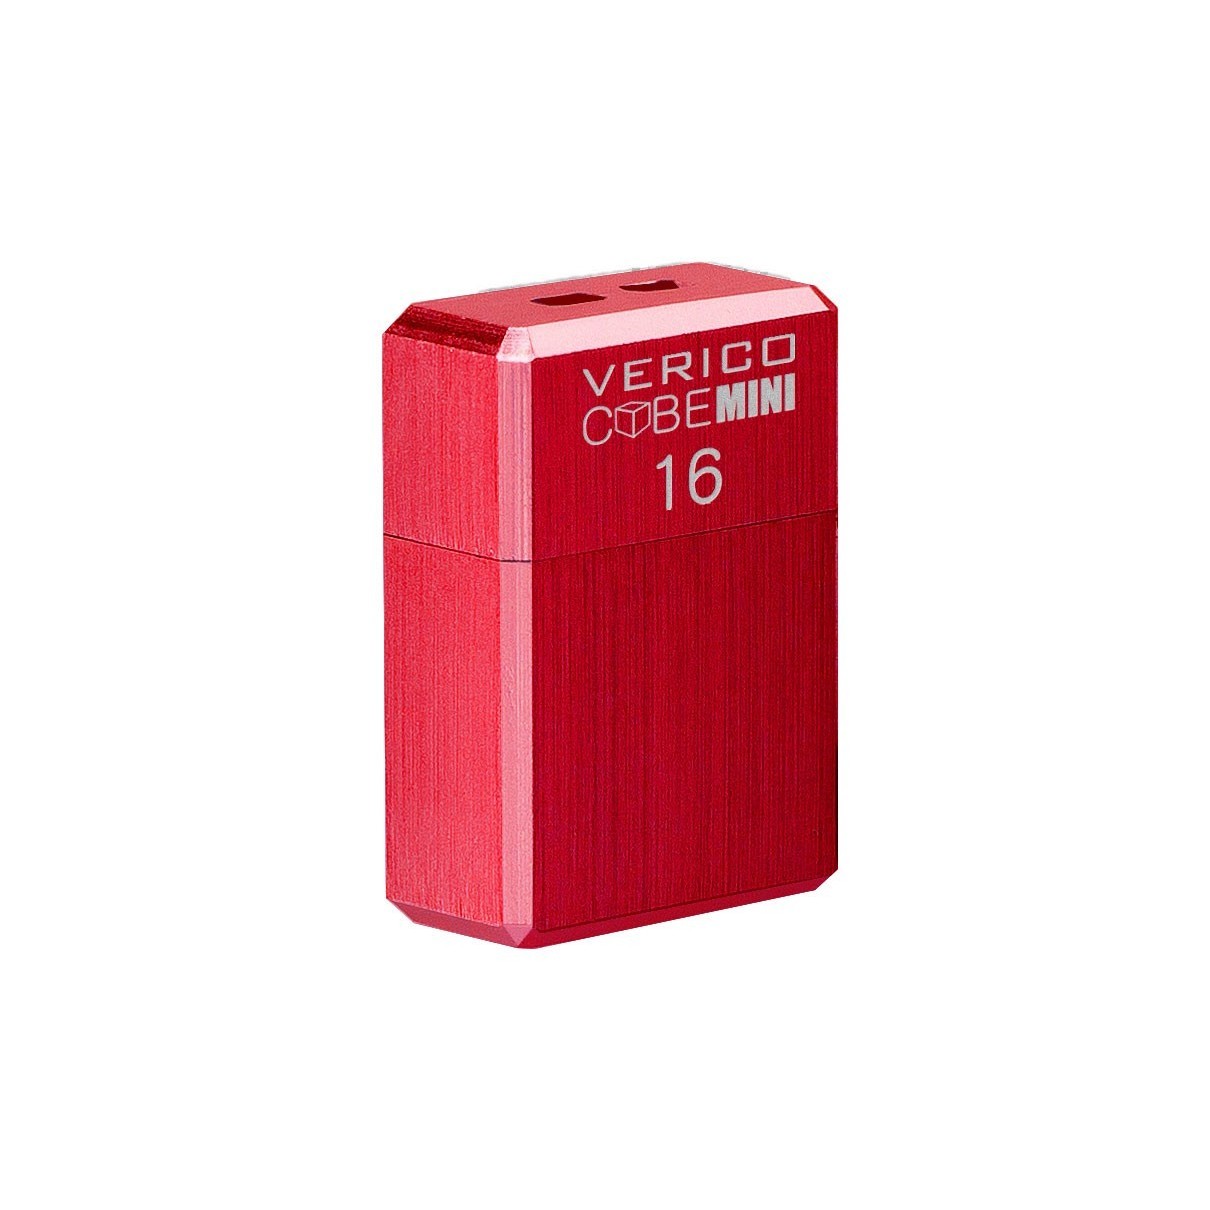 Cube mini green. Verico 08 флешка красная. Miniтube Mini 2013 amp. Cube Mini. Verico 08 флешка Verico Wanderer.